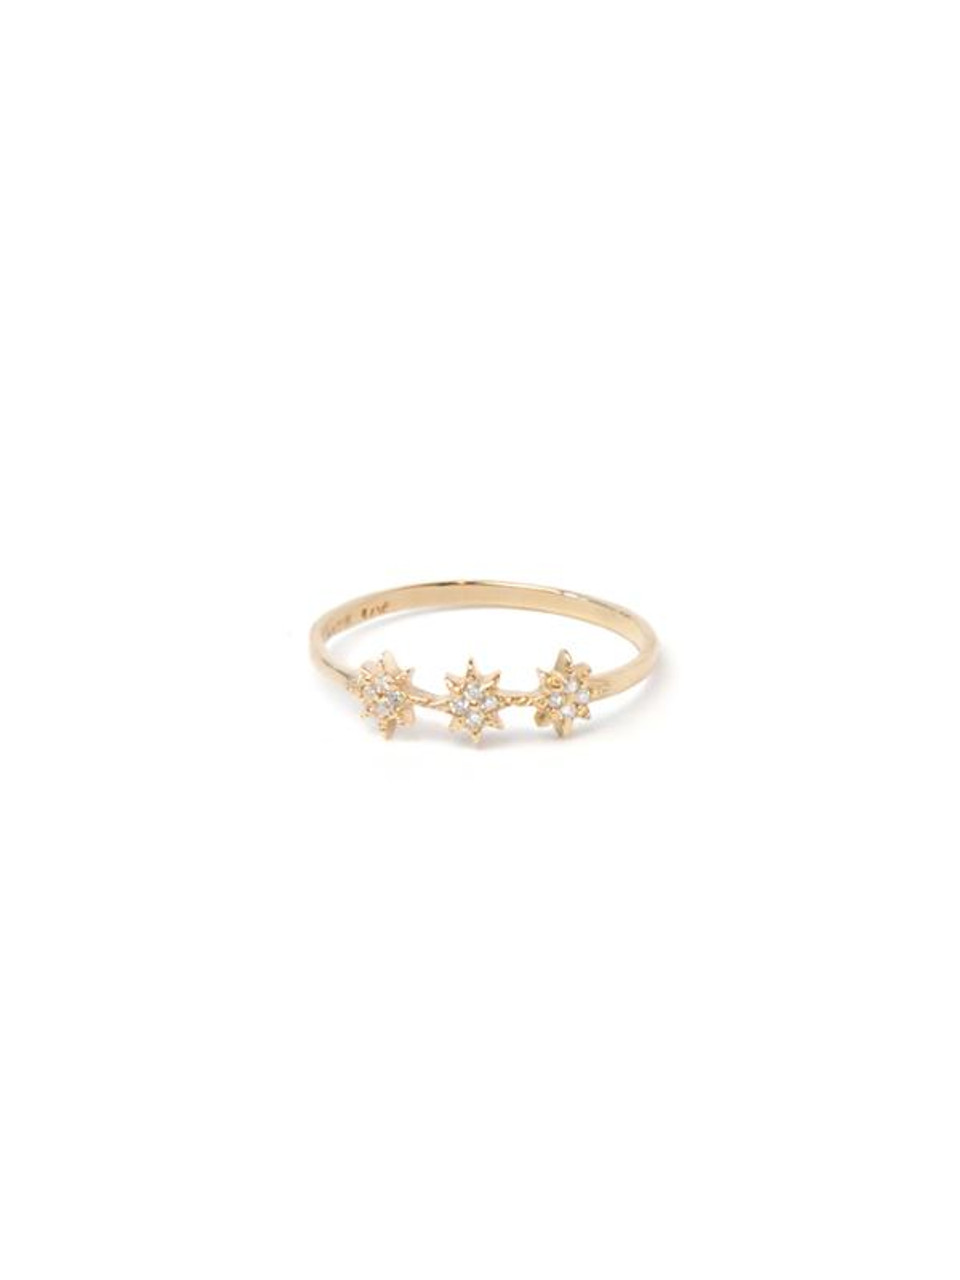 Three Star Diamond Ring | Star Jewelry 